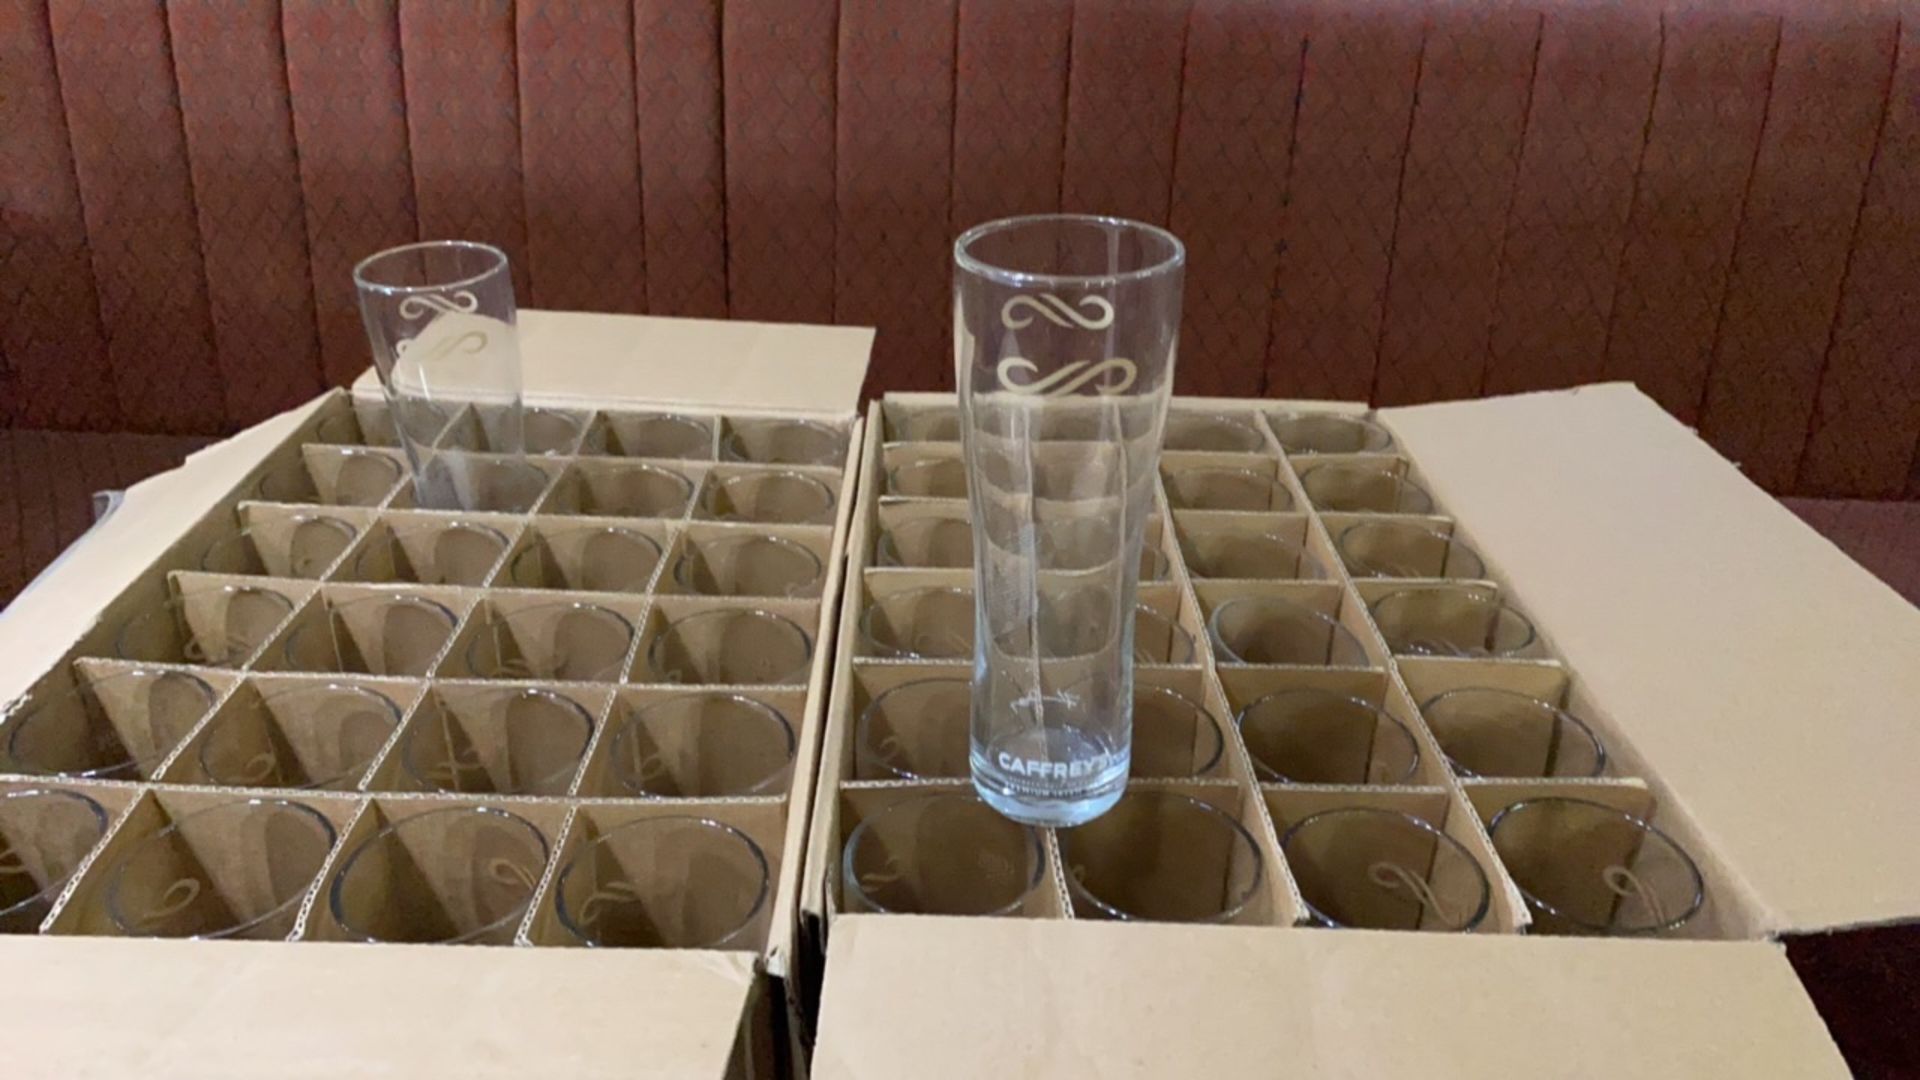 Quantity Of Caffreys Pint Glasses - Image 4 of 4